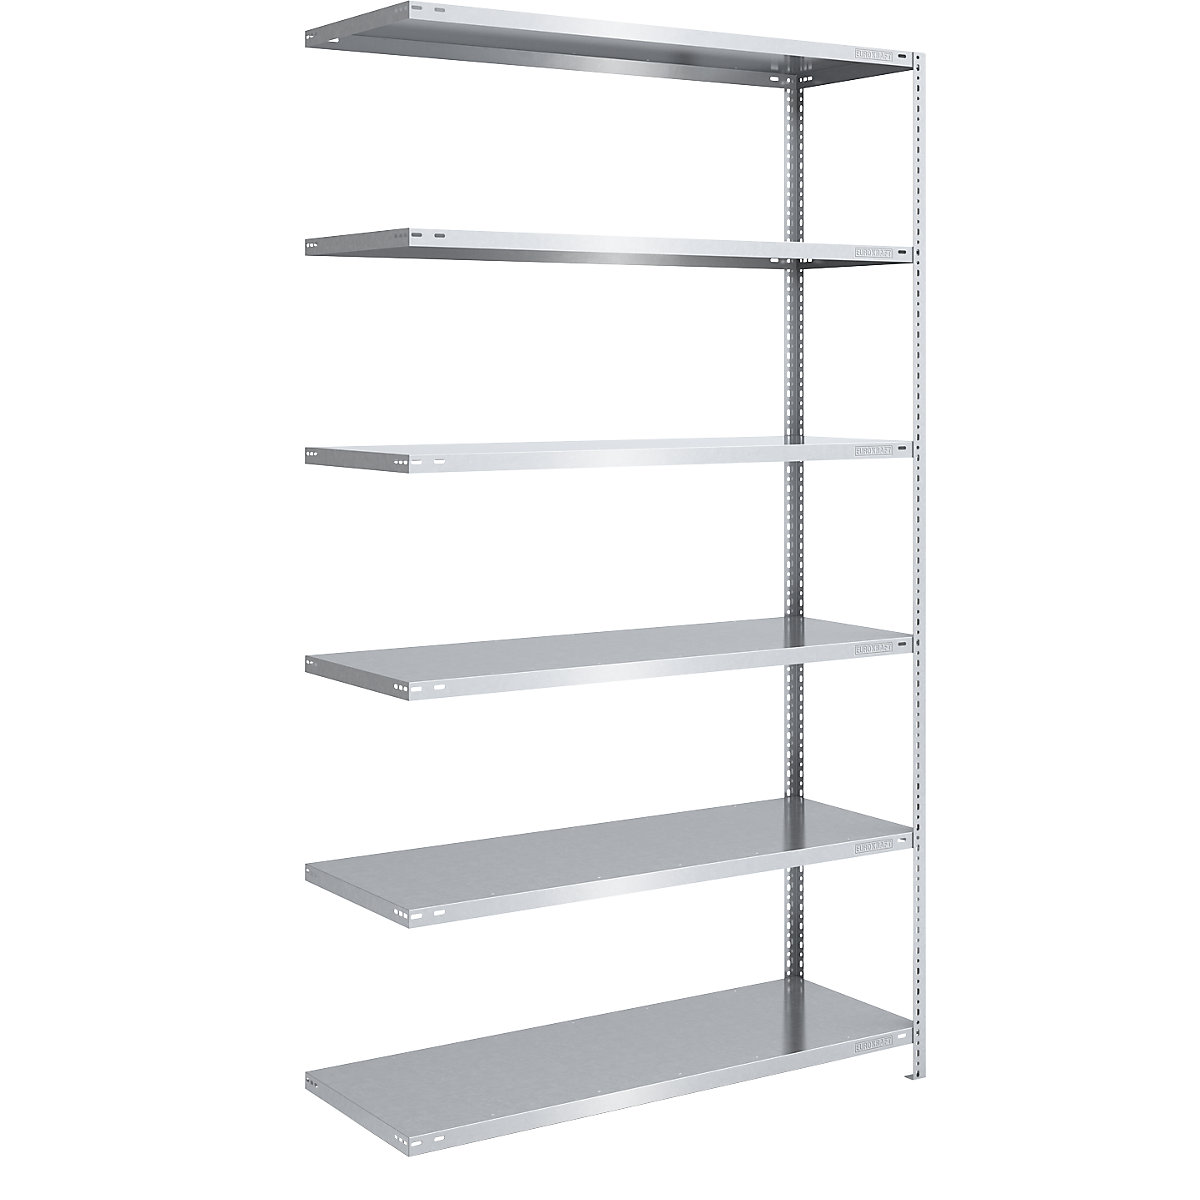 Bolt-together shelf unit, light duty, zinc plated – eurokraft pro, shelf unit height 2500 mm, shelf width 1300 mm, depth 600 mm, extension shelf unit-5